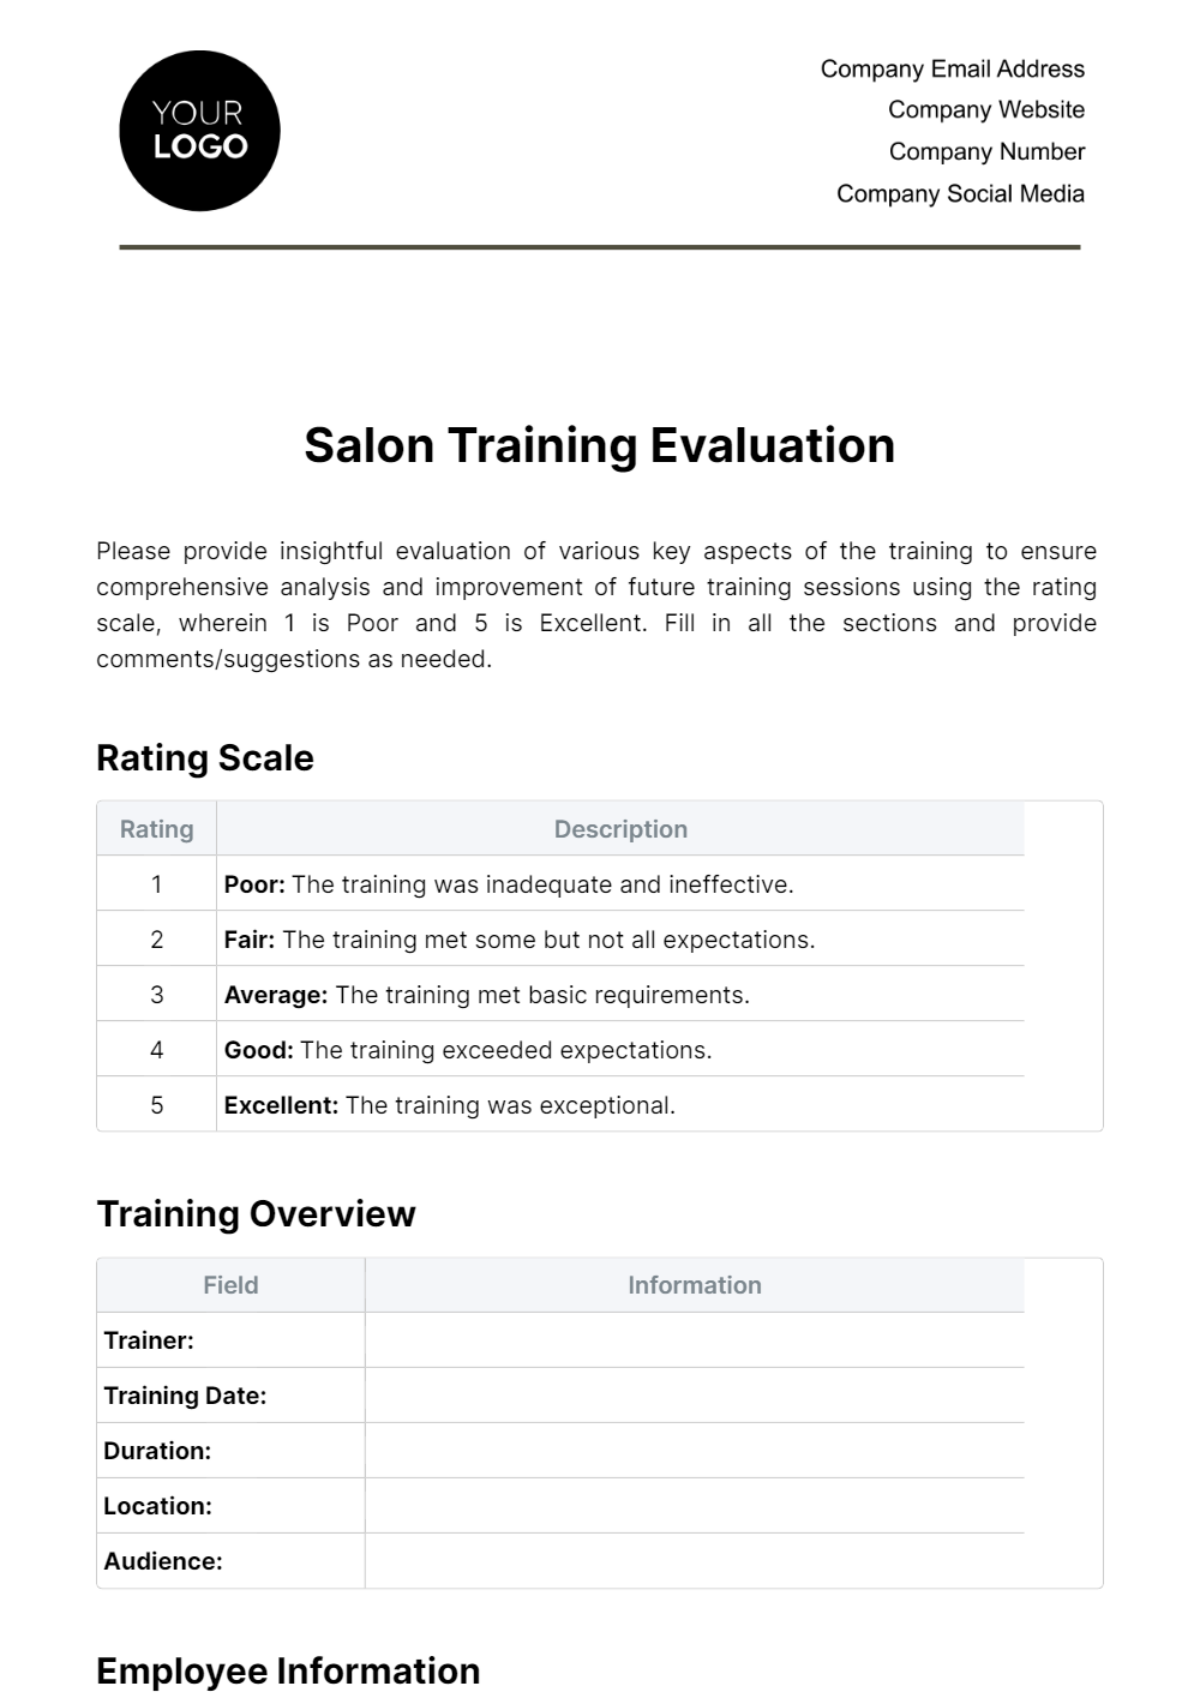 Free Salon Training Evaluation Template